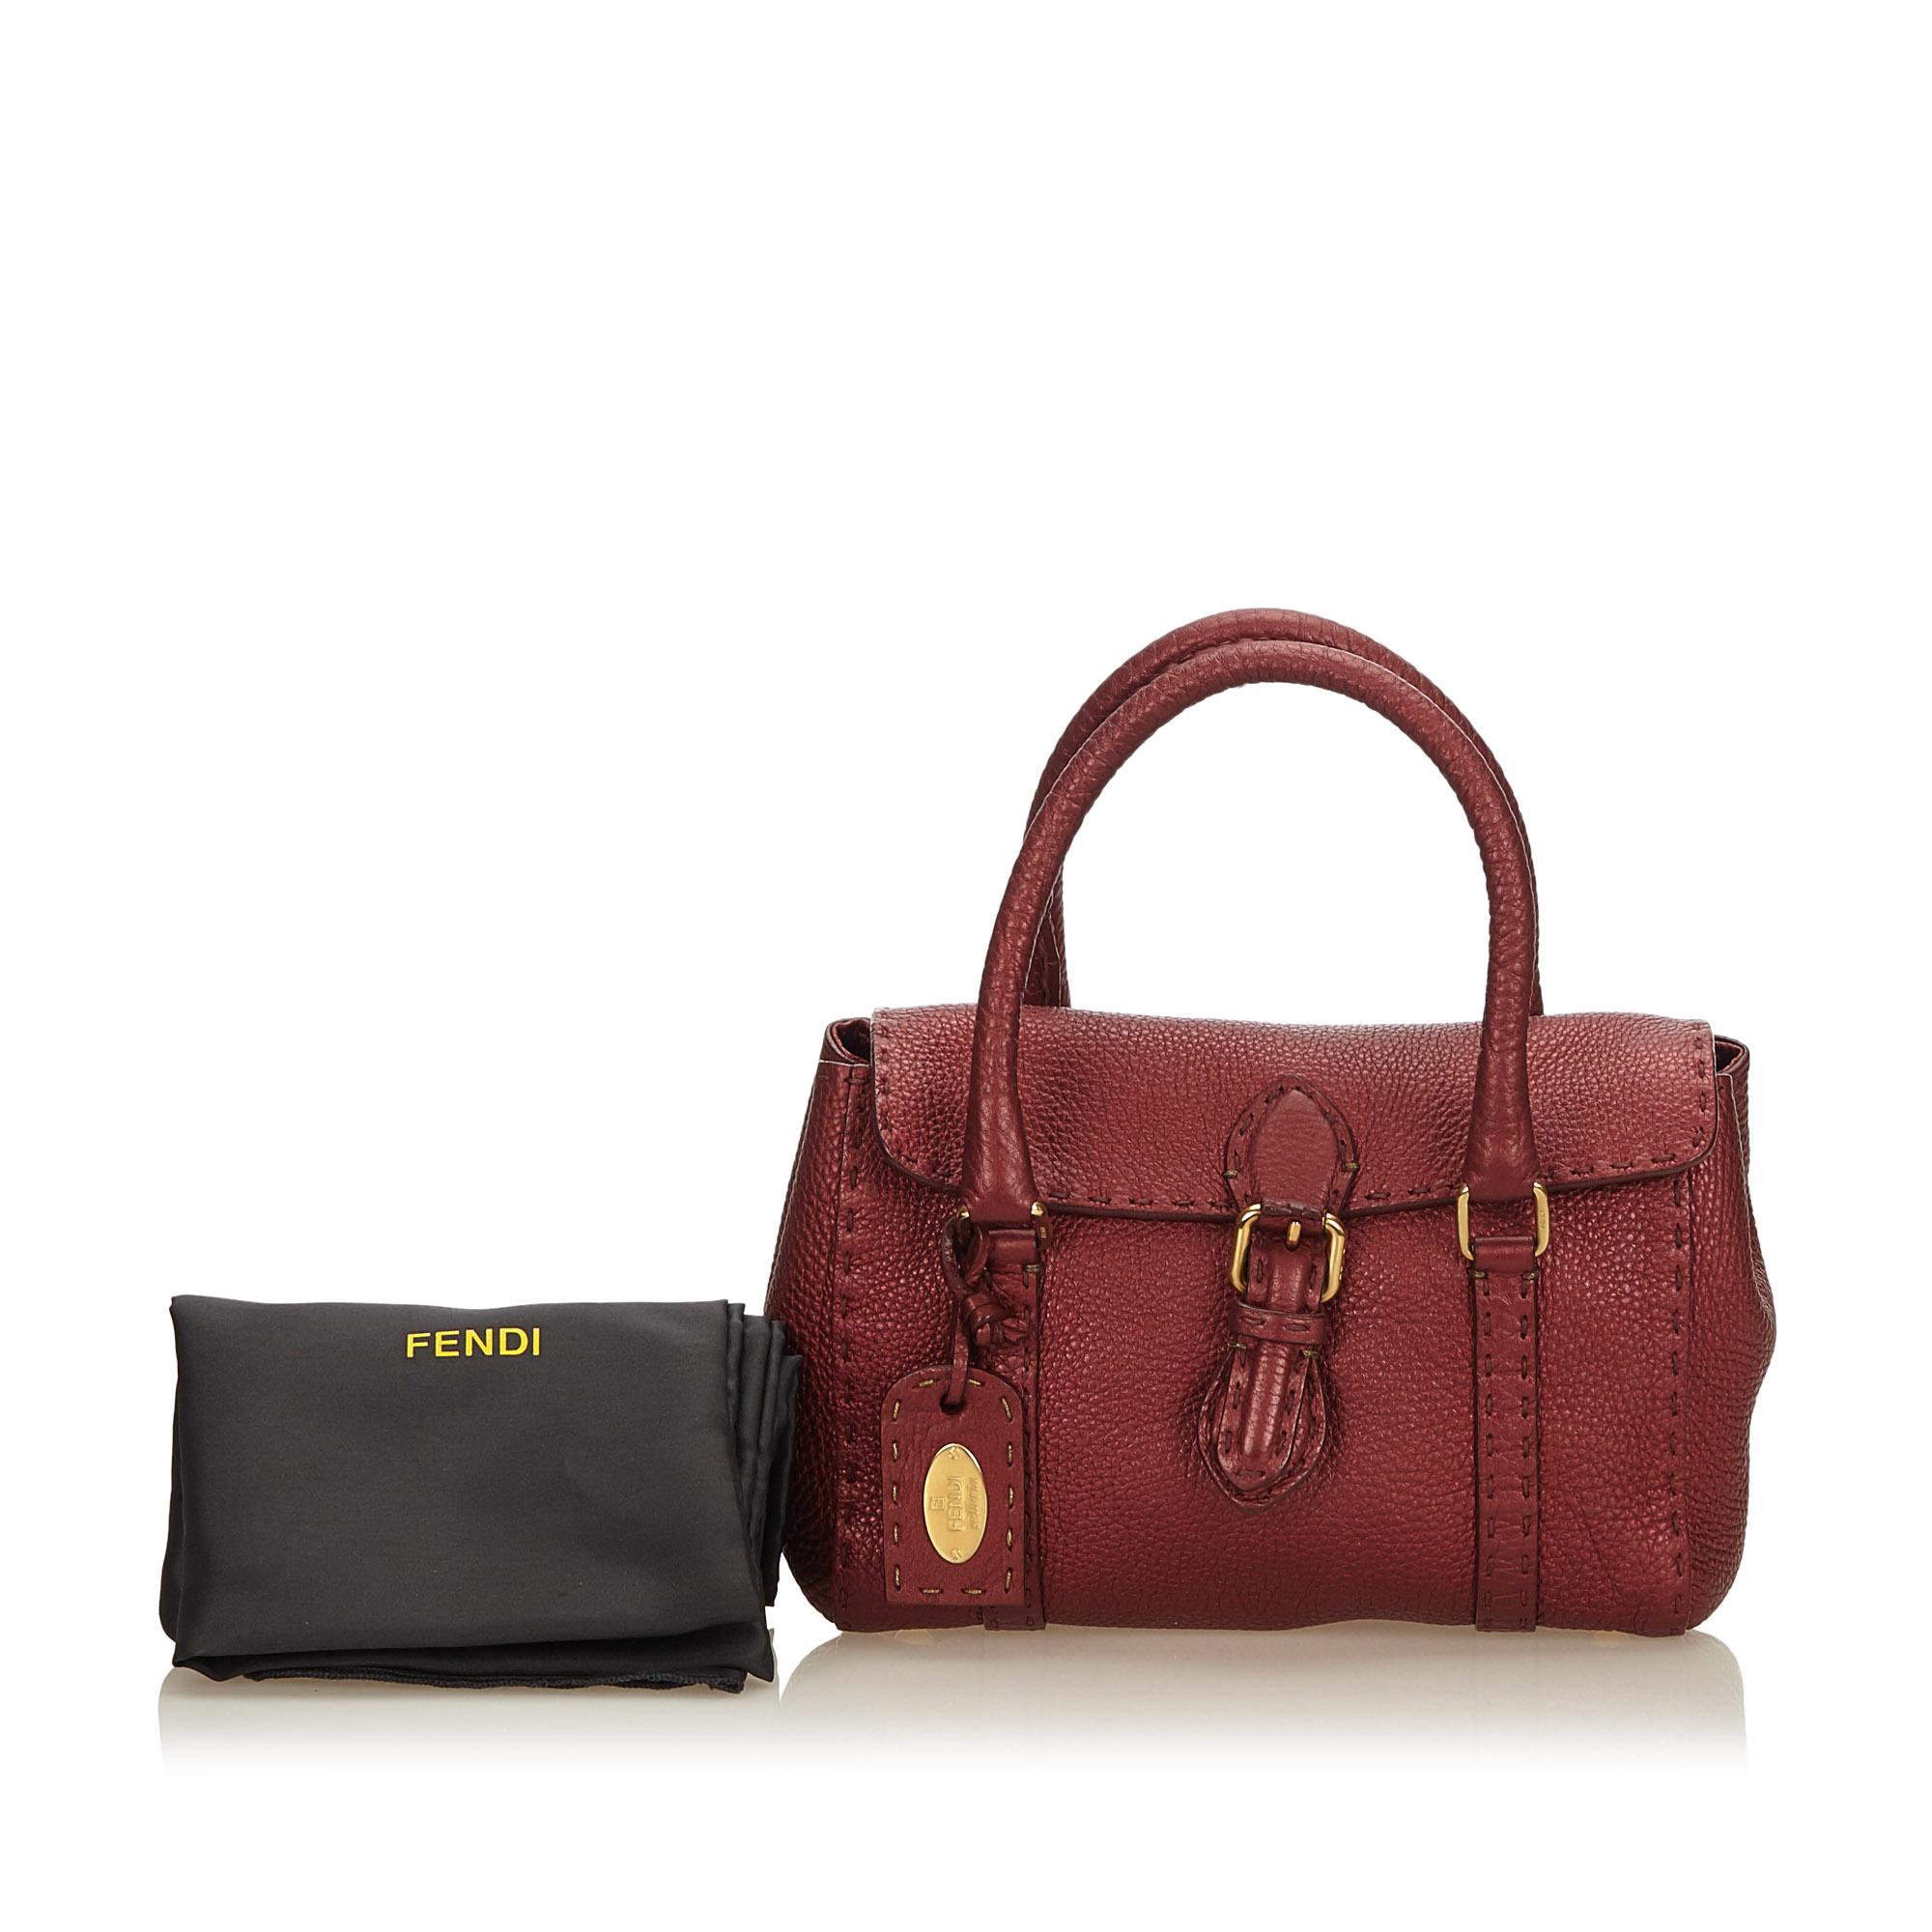 Fendi Red Mini Linda Handbag For Sale 6